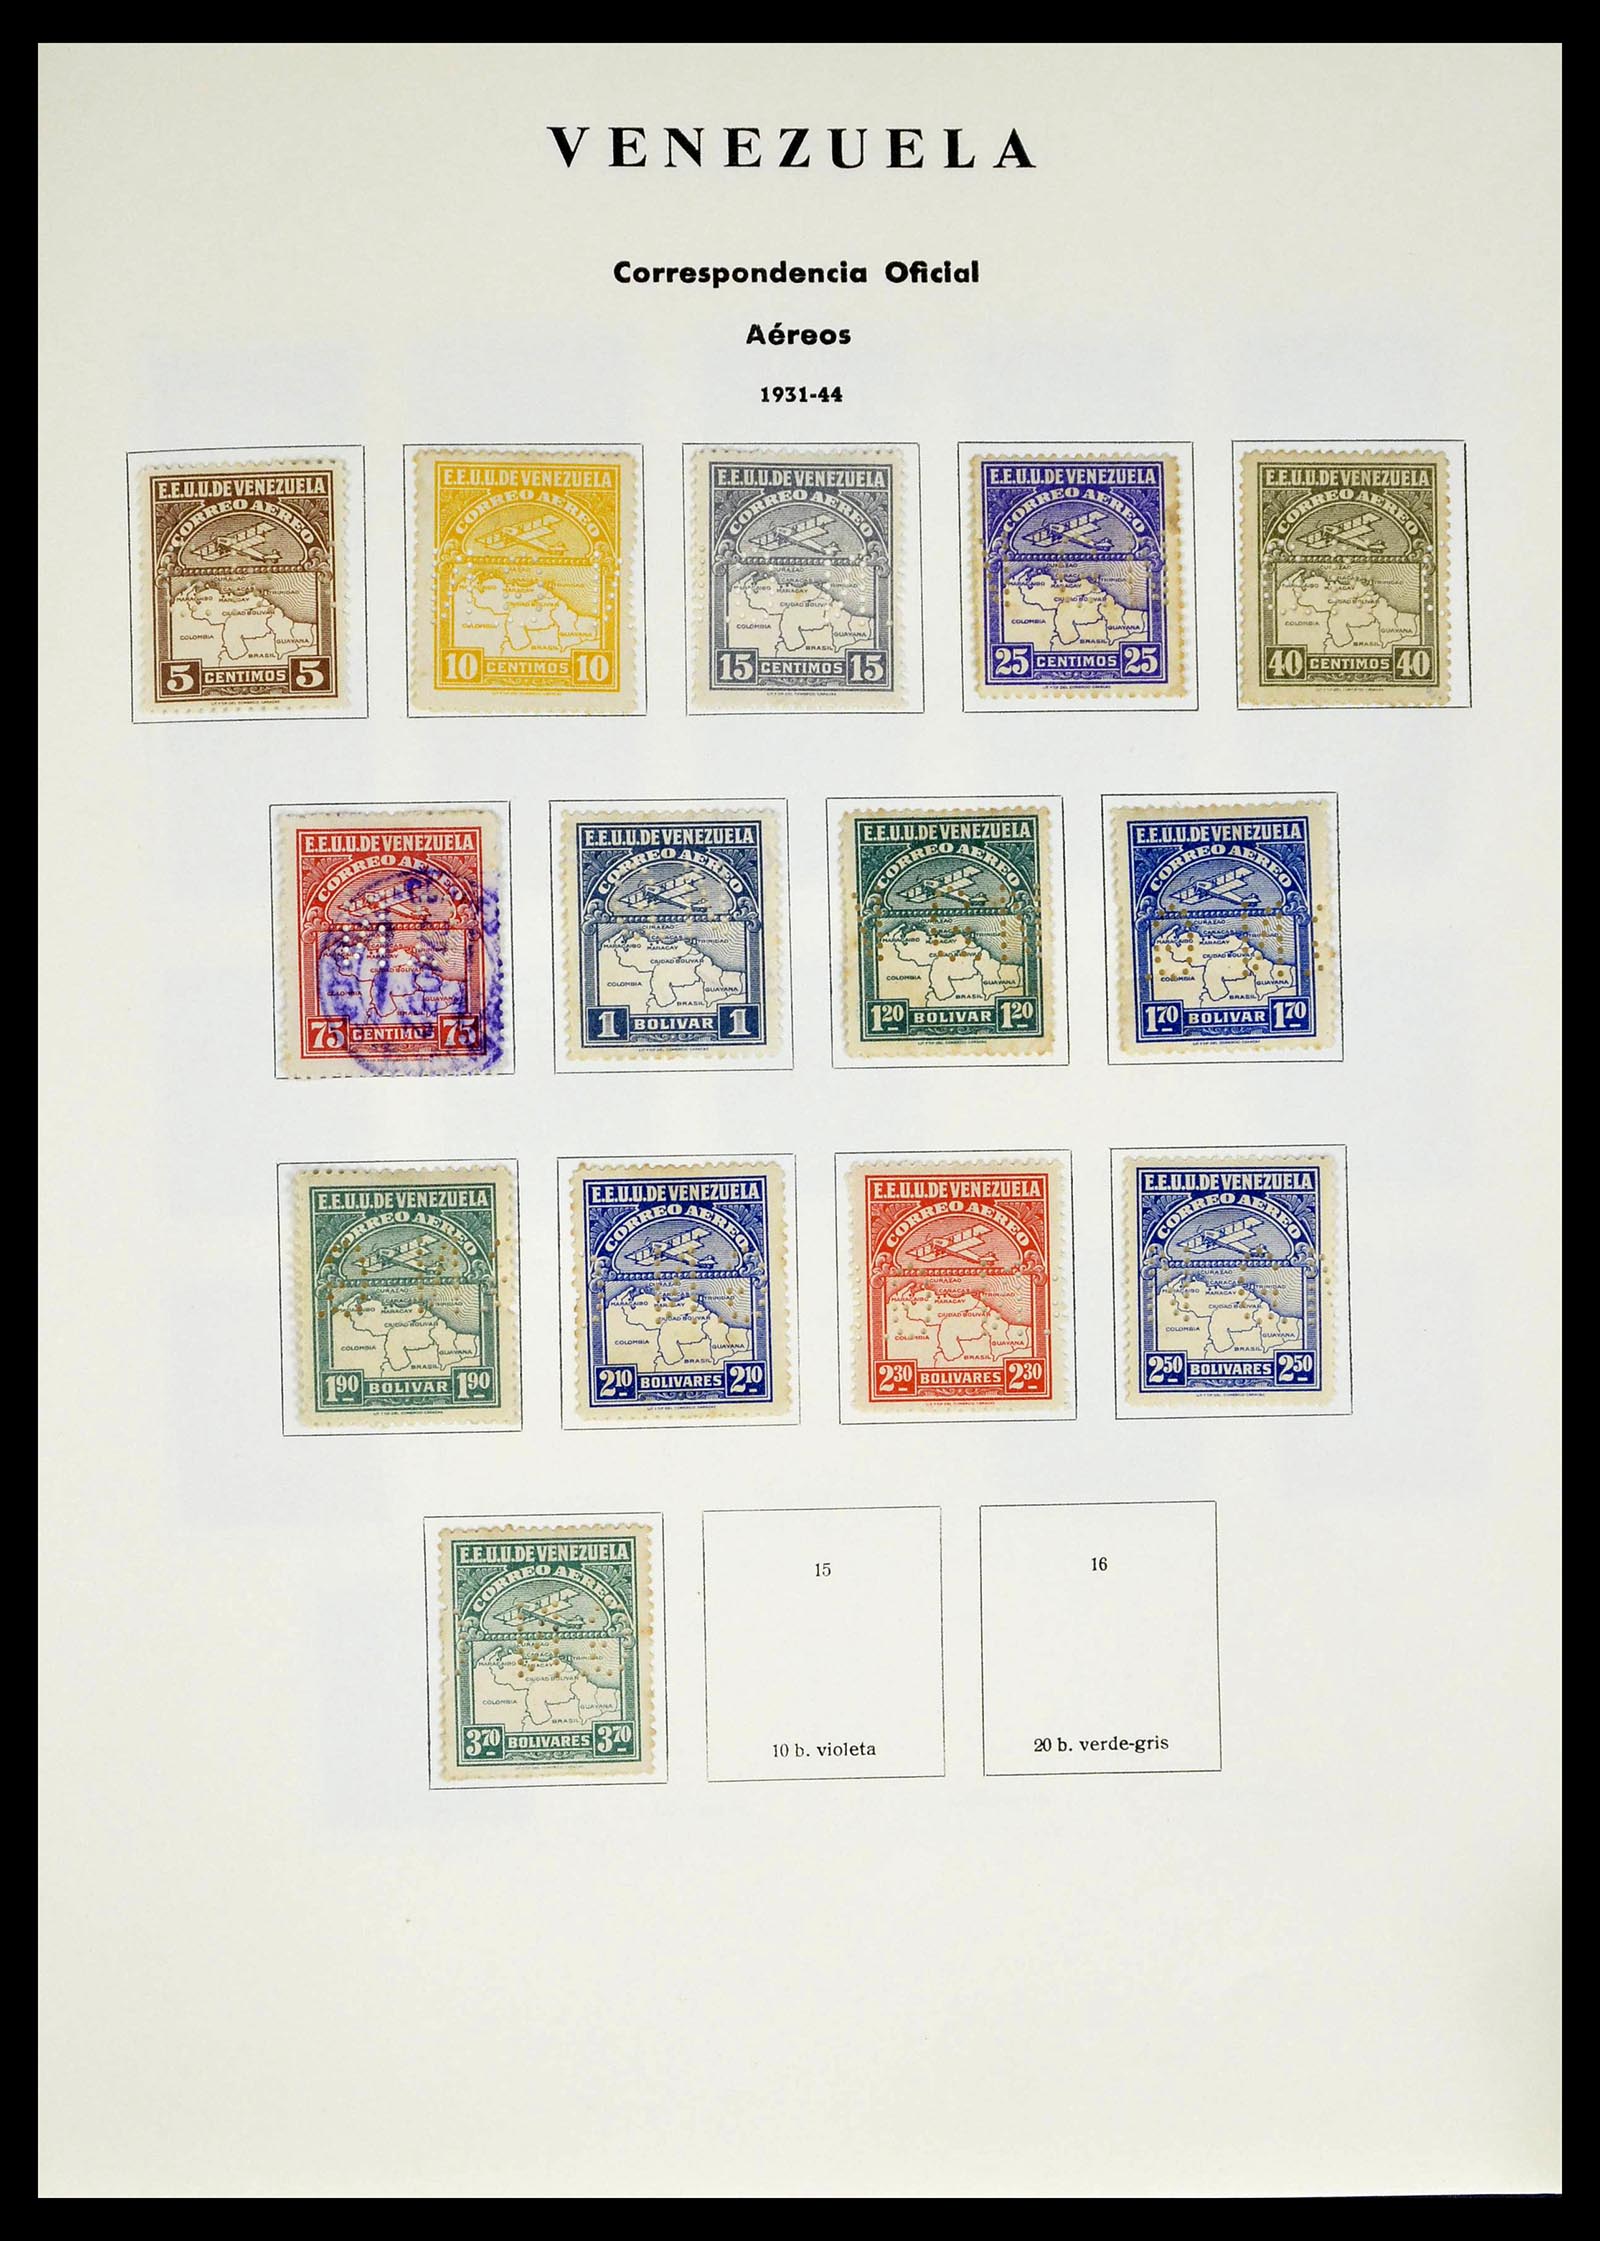 39223 0202 - Stamp collection 39223 Venezuela 1859-1984.